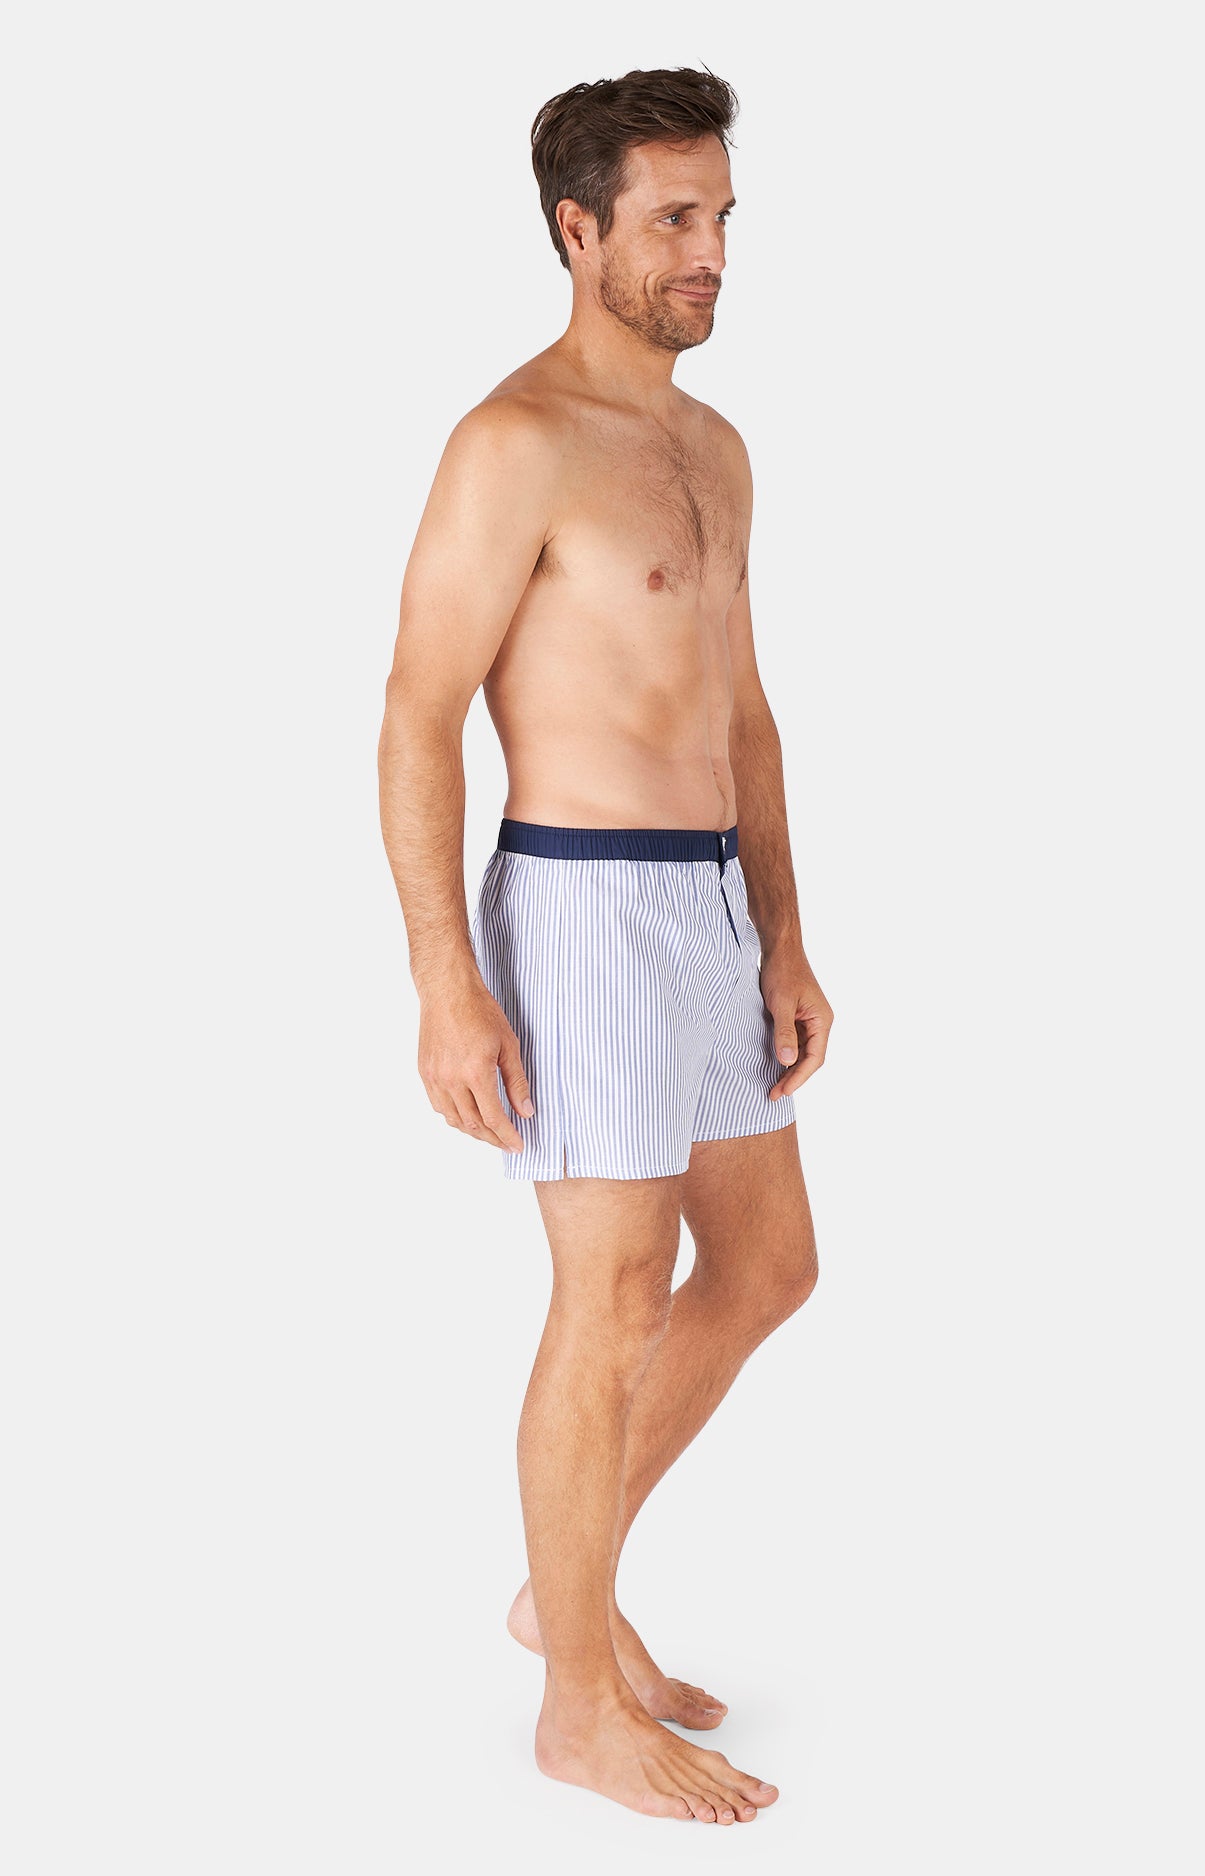 Boxer shorts with jockstrap - Le Club n°004